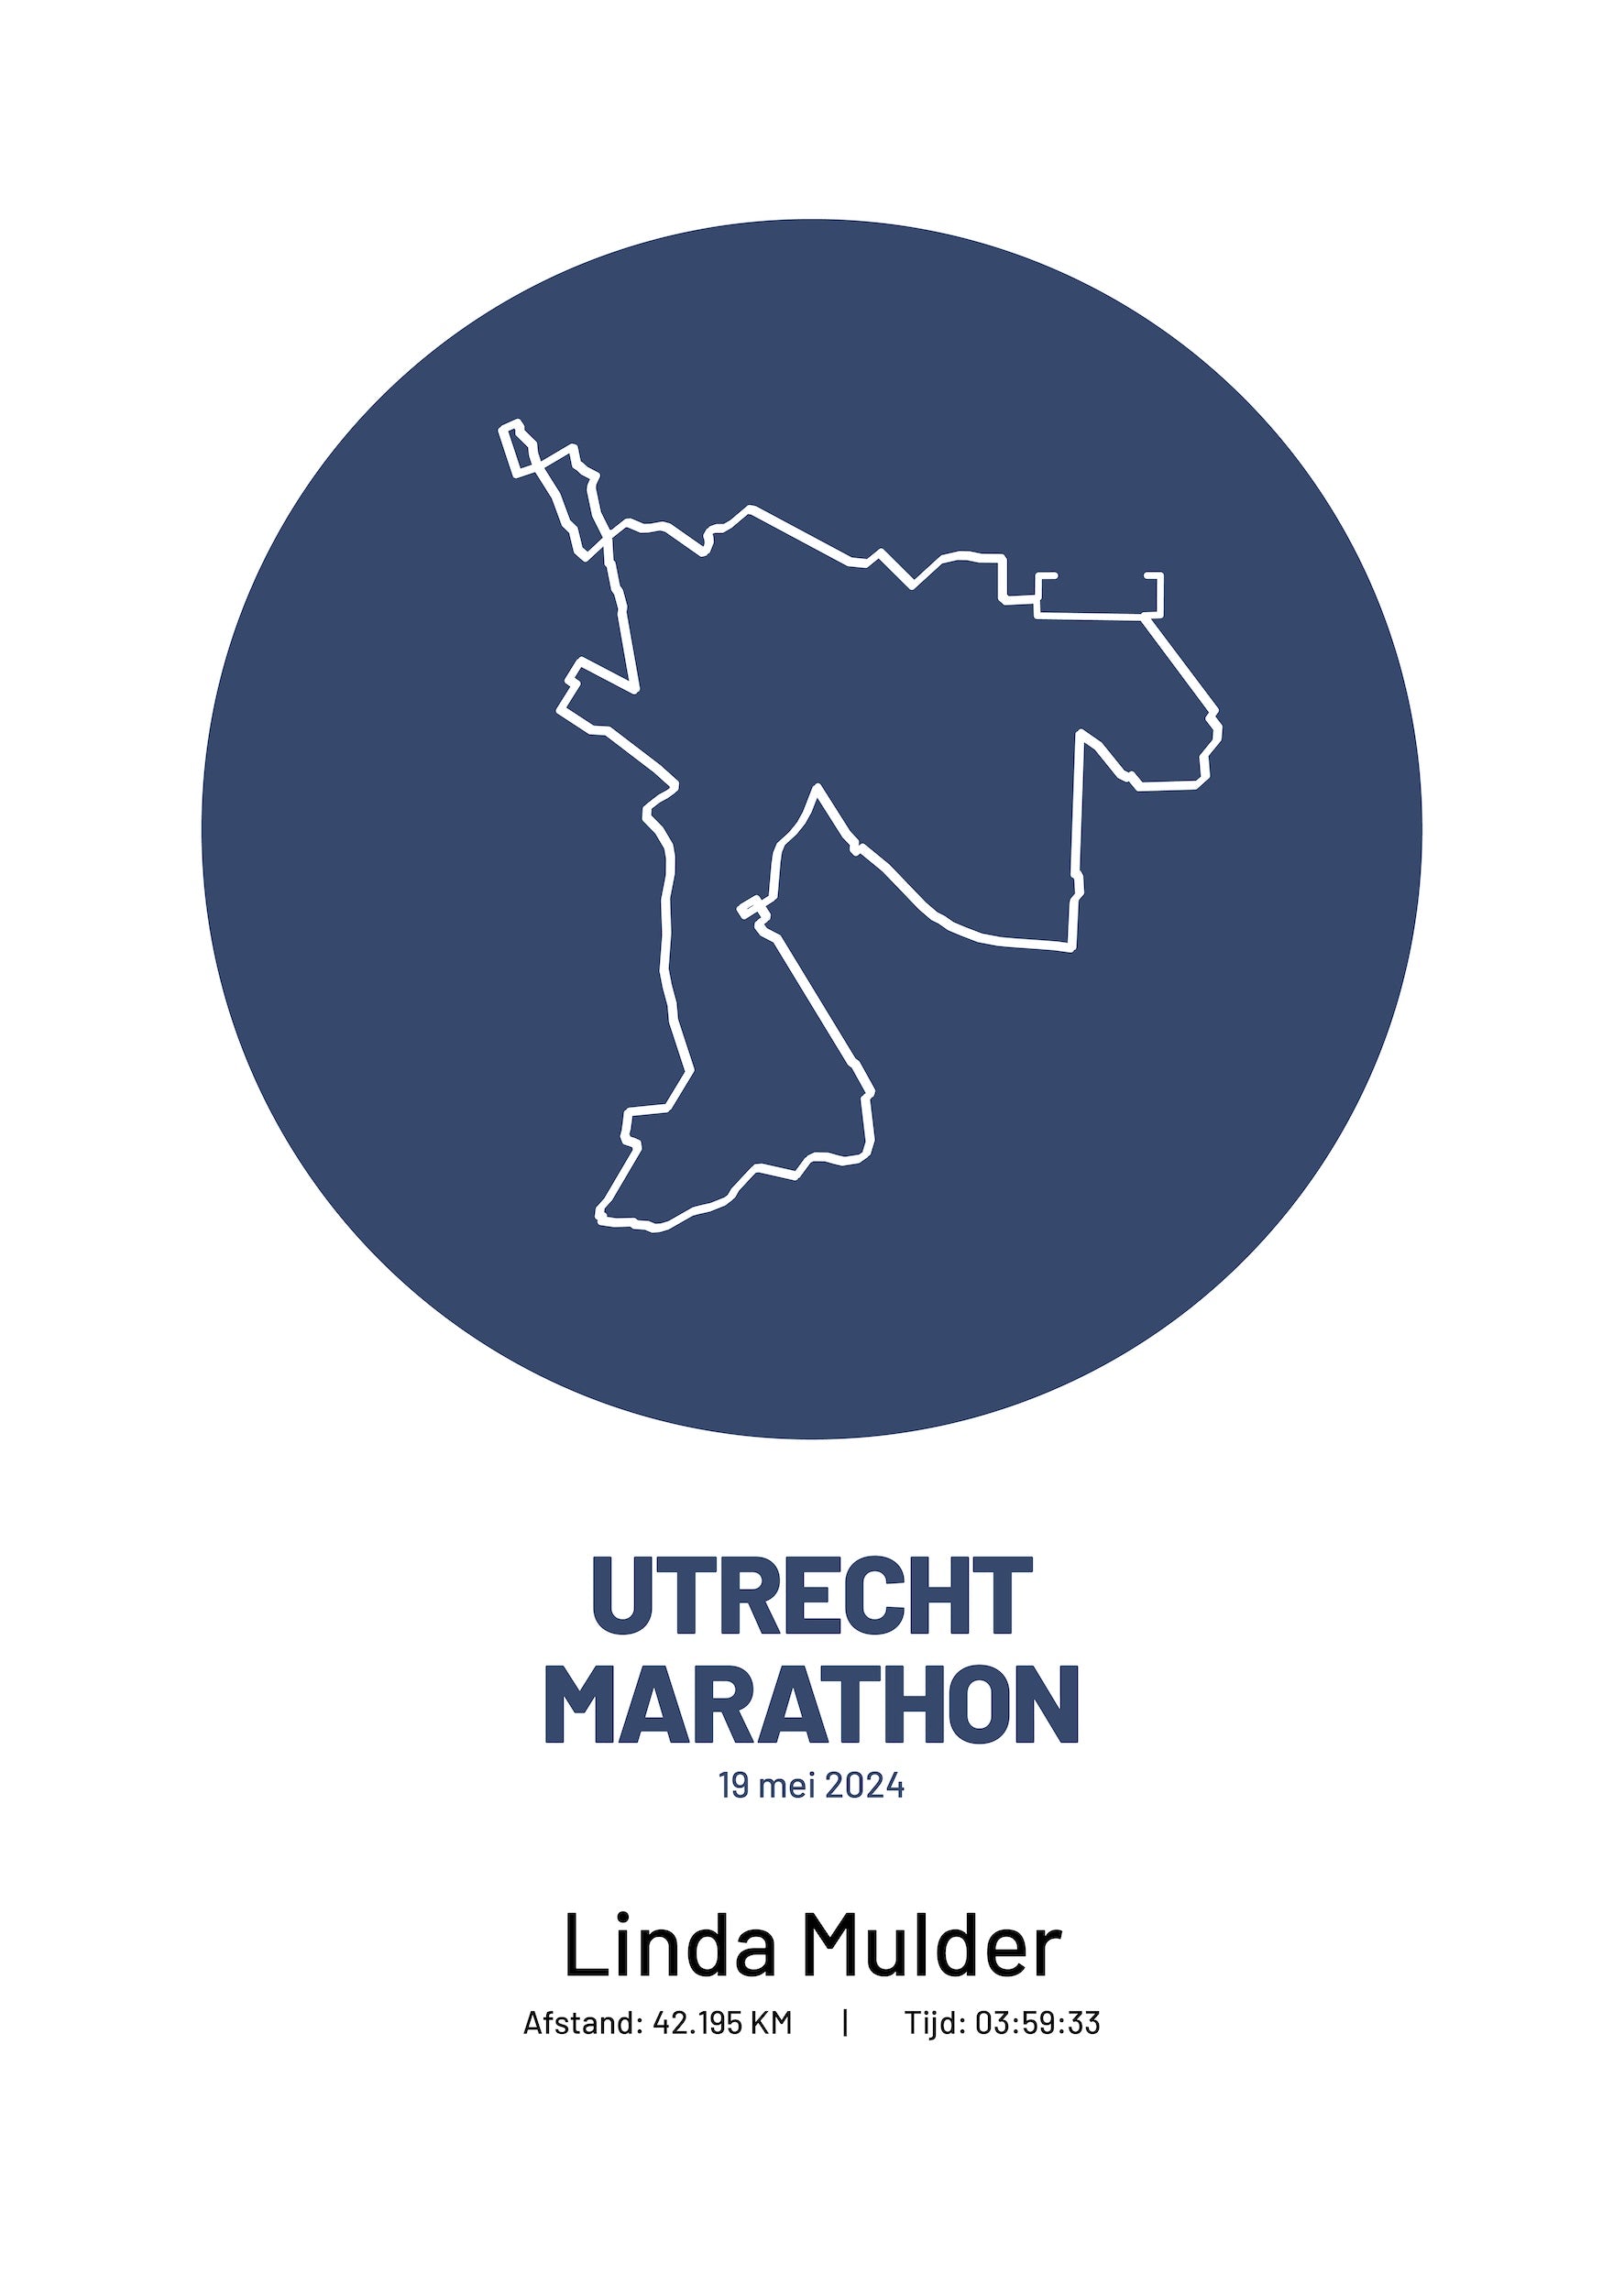 Utrecht Marathon - Simply Stylish - Poster